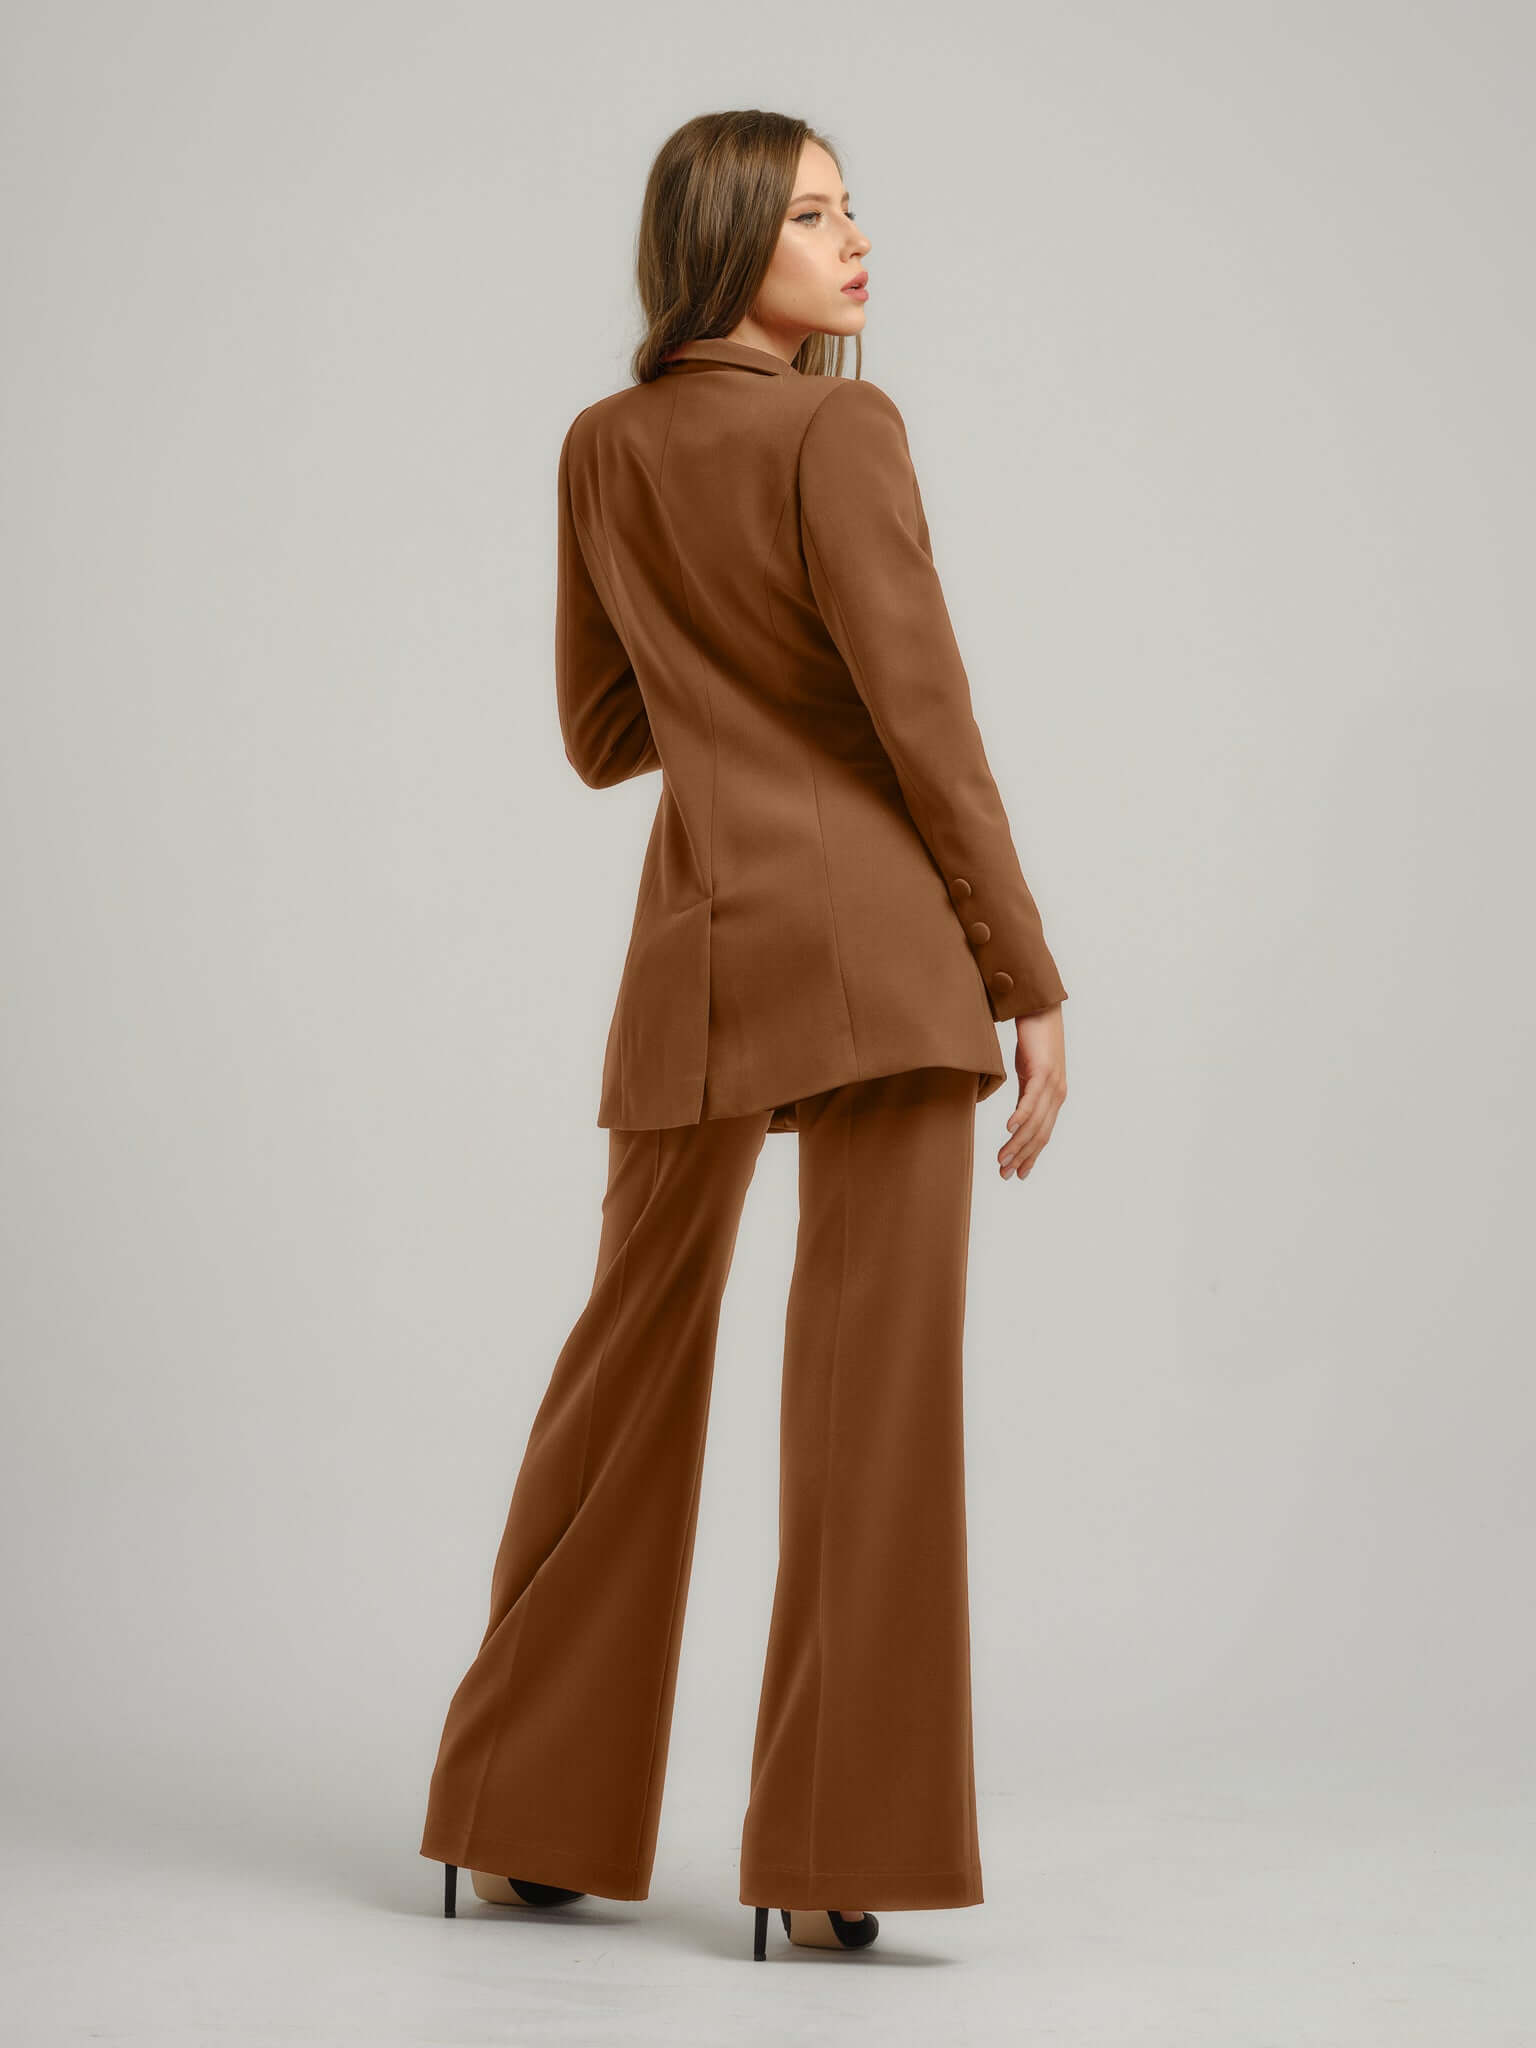 Warm Wishes High-Waist Flared Trousers by Tia Dorraine Women's Luxury Fashion Designer Clothing Brand